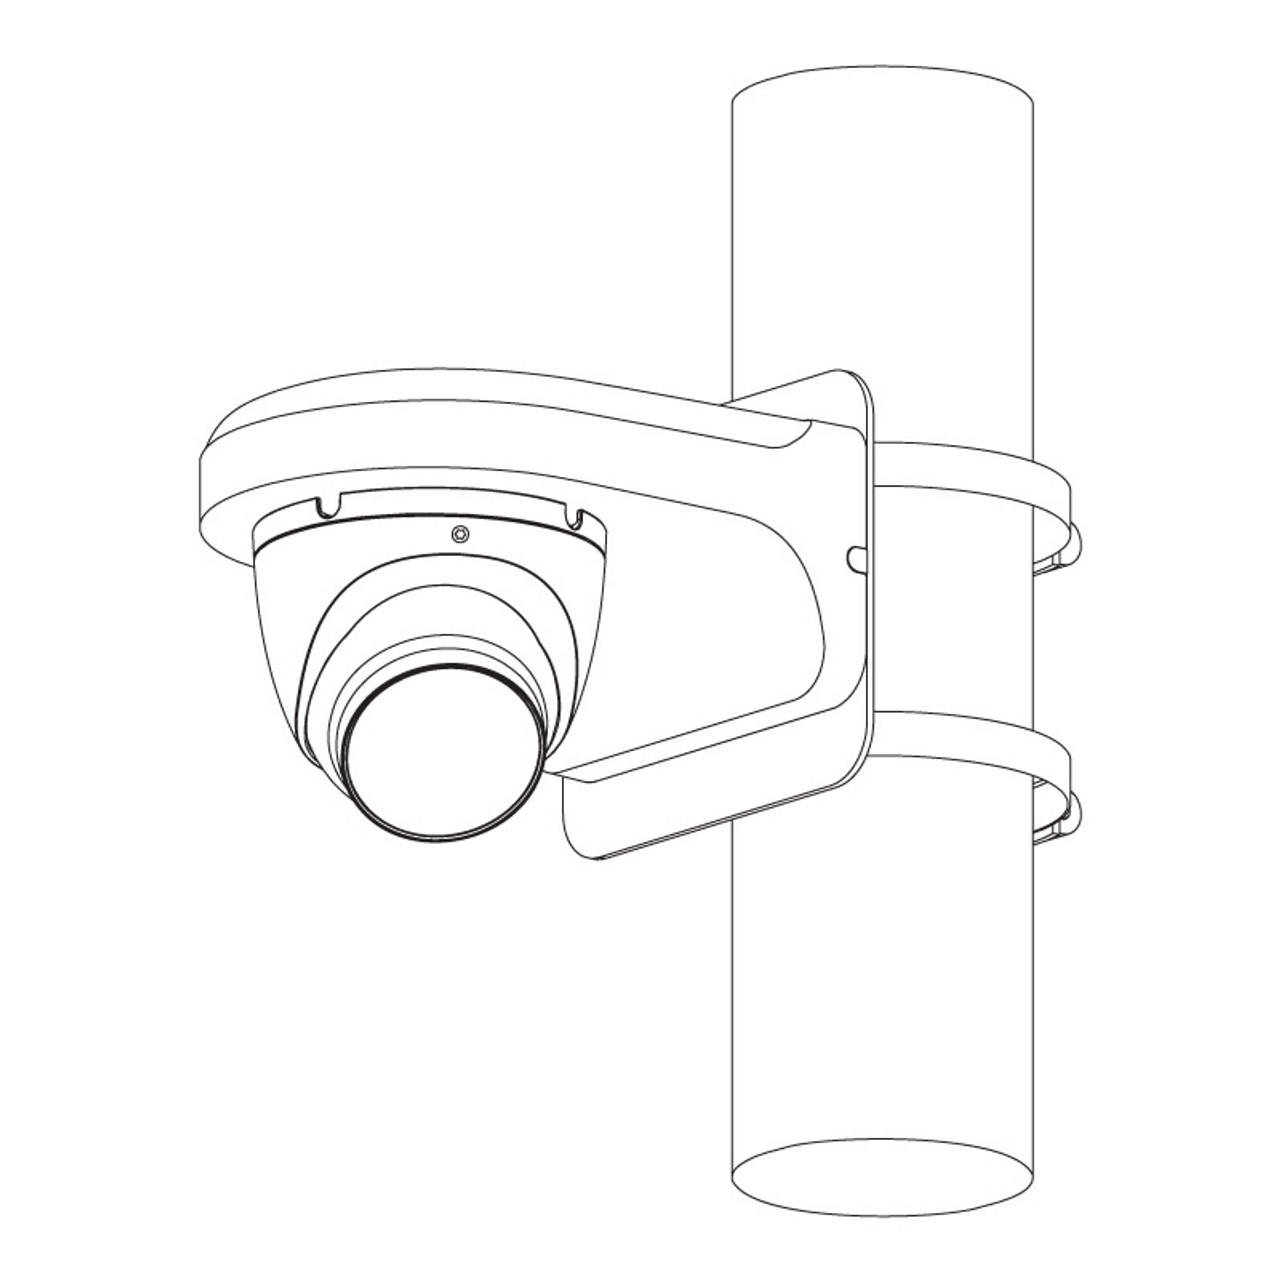 SecurView Professional 2MP 2.8mm Fixed Outdoor HDCVI Turret Camera